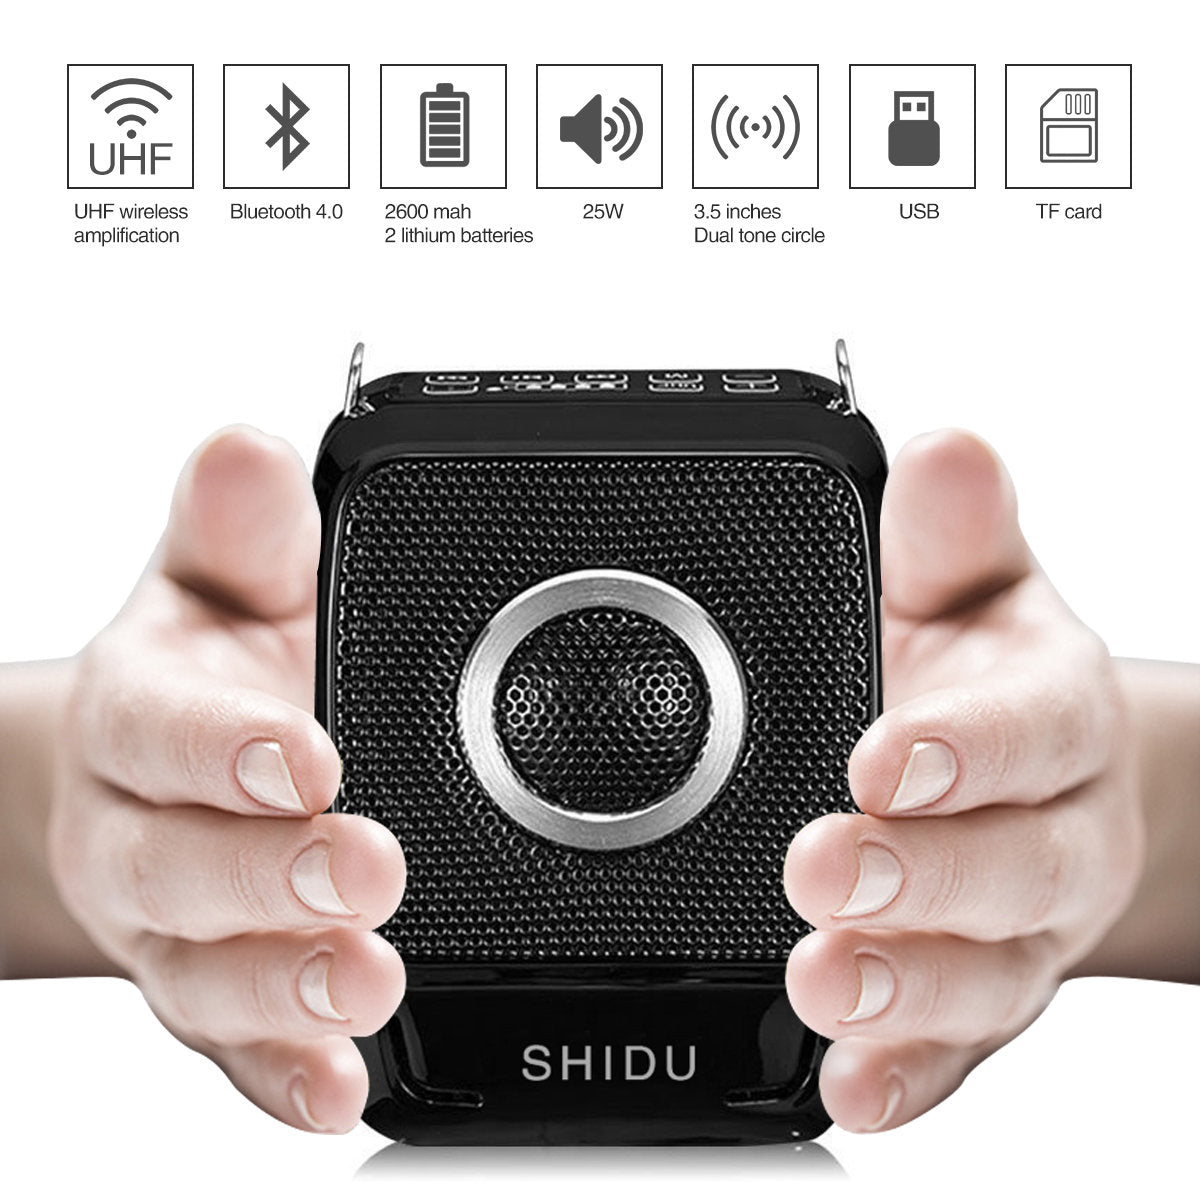 SoundBuddy Portable Speaker Kit with Bodypack Transmitter